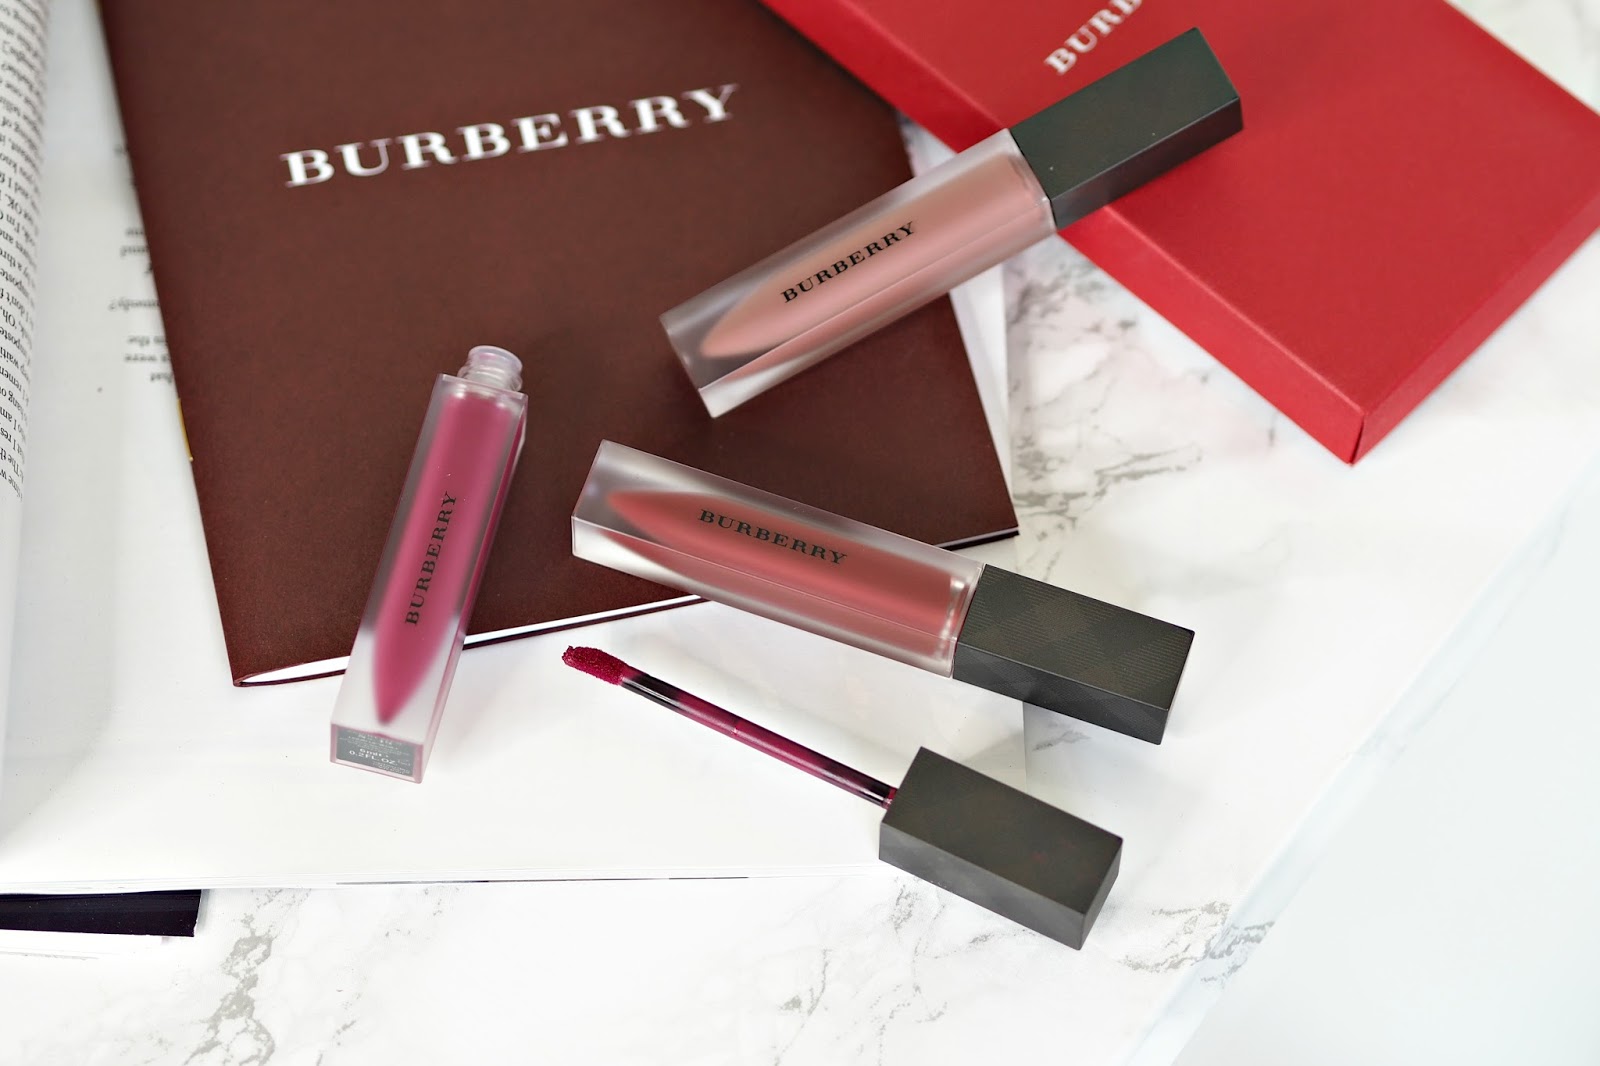 Burberry Liquid Lip Velvet Lipsticks in oxblood, fawn and bright plum